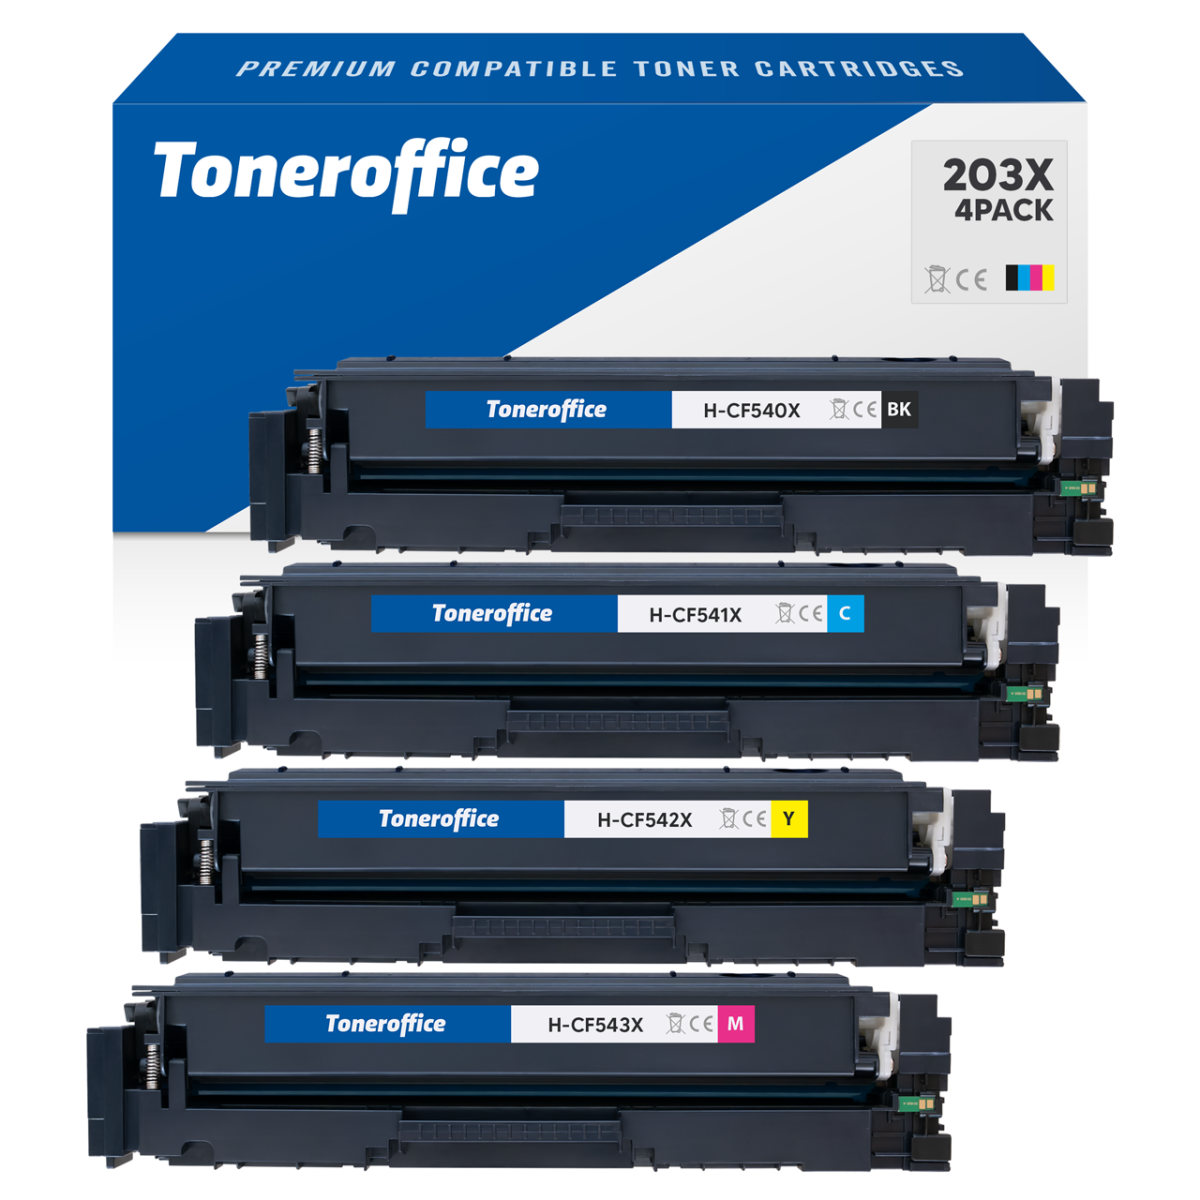 Neue Rebuilt Toner für HP Color Laserjet MFP M280 M281 M254 (203X) CF540X CF541X CF542X CF543X jetzt verfügbar!